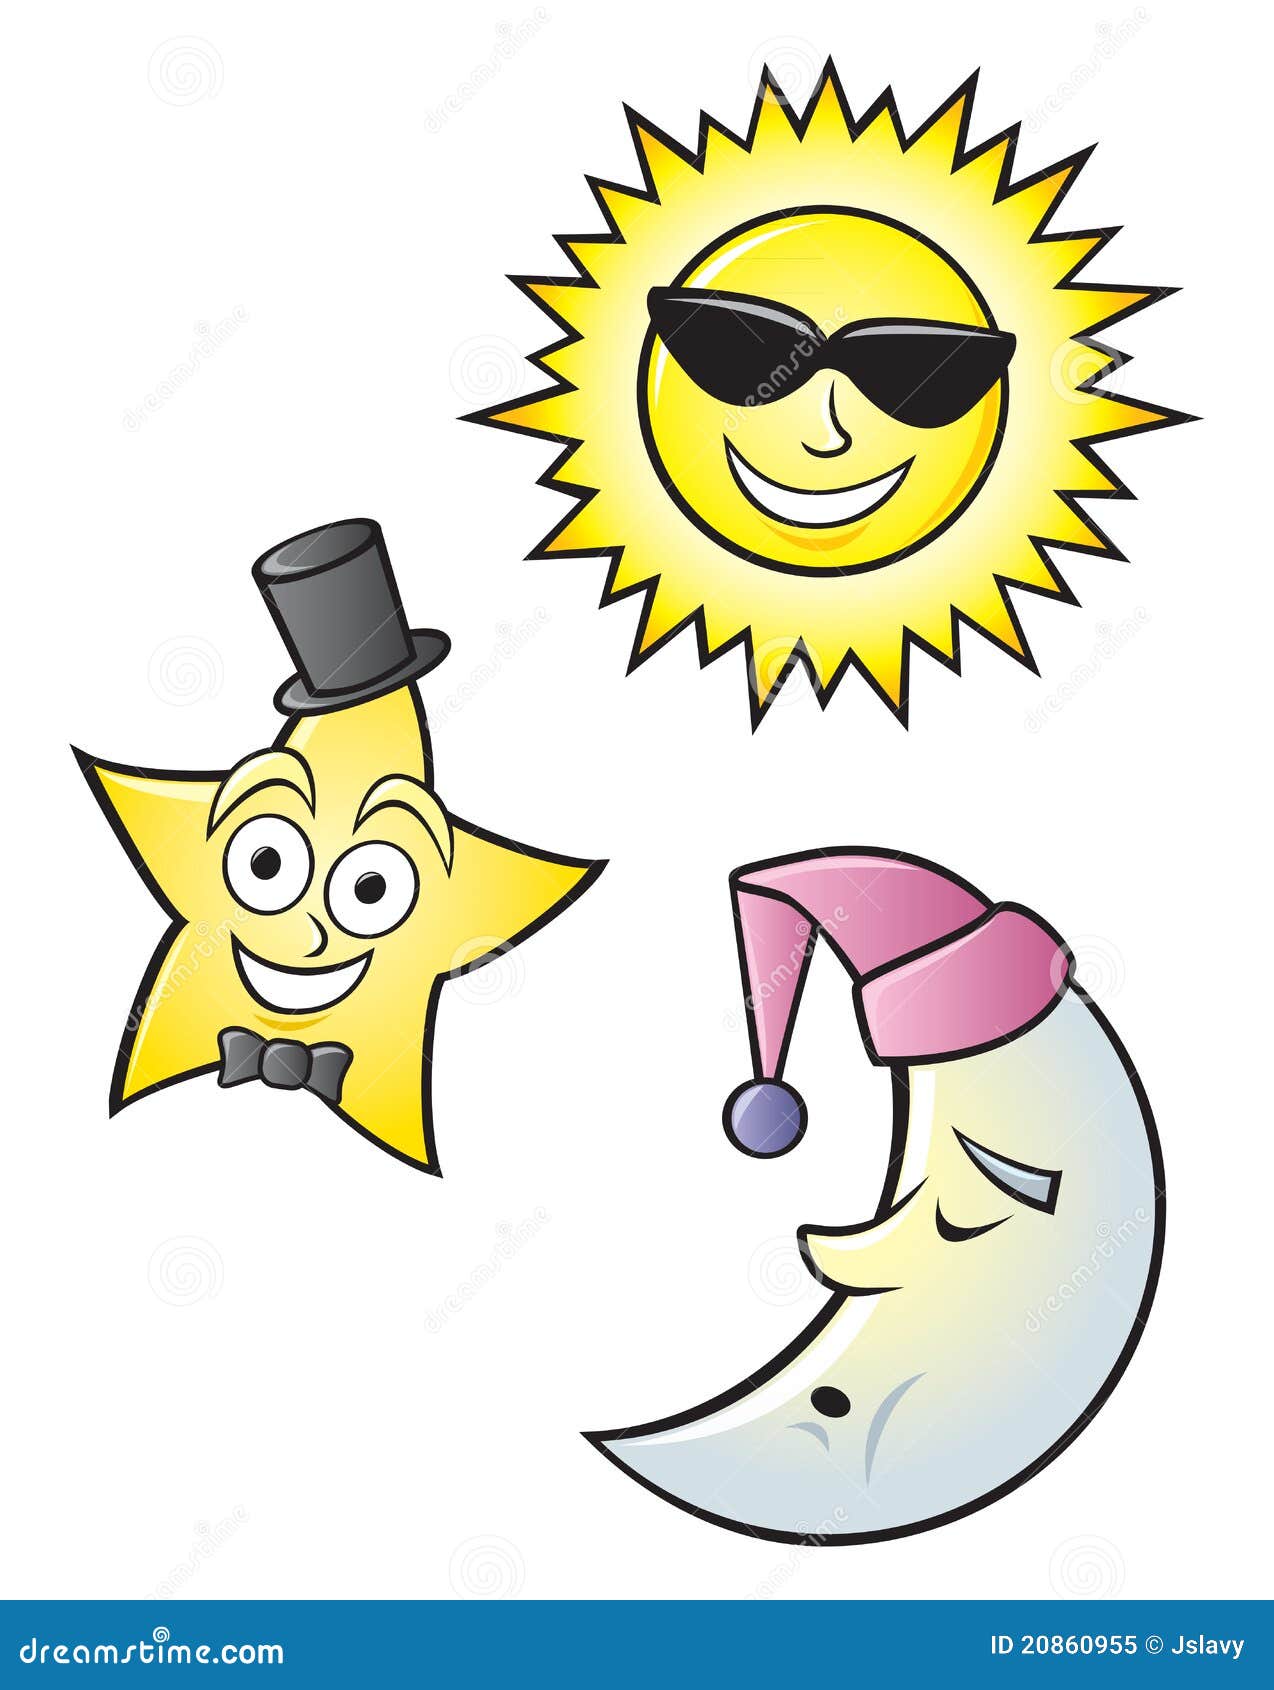 Cartoon Sun Moon And Star Royalty Free Stock Photo - Image: 20860955